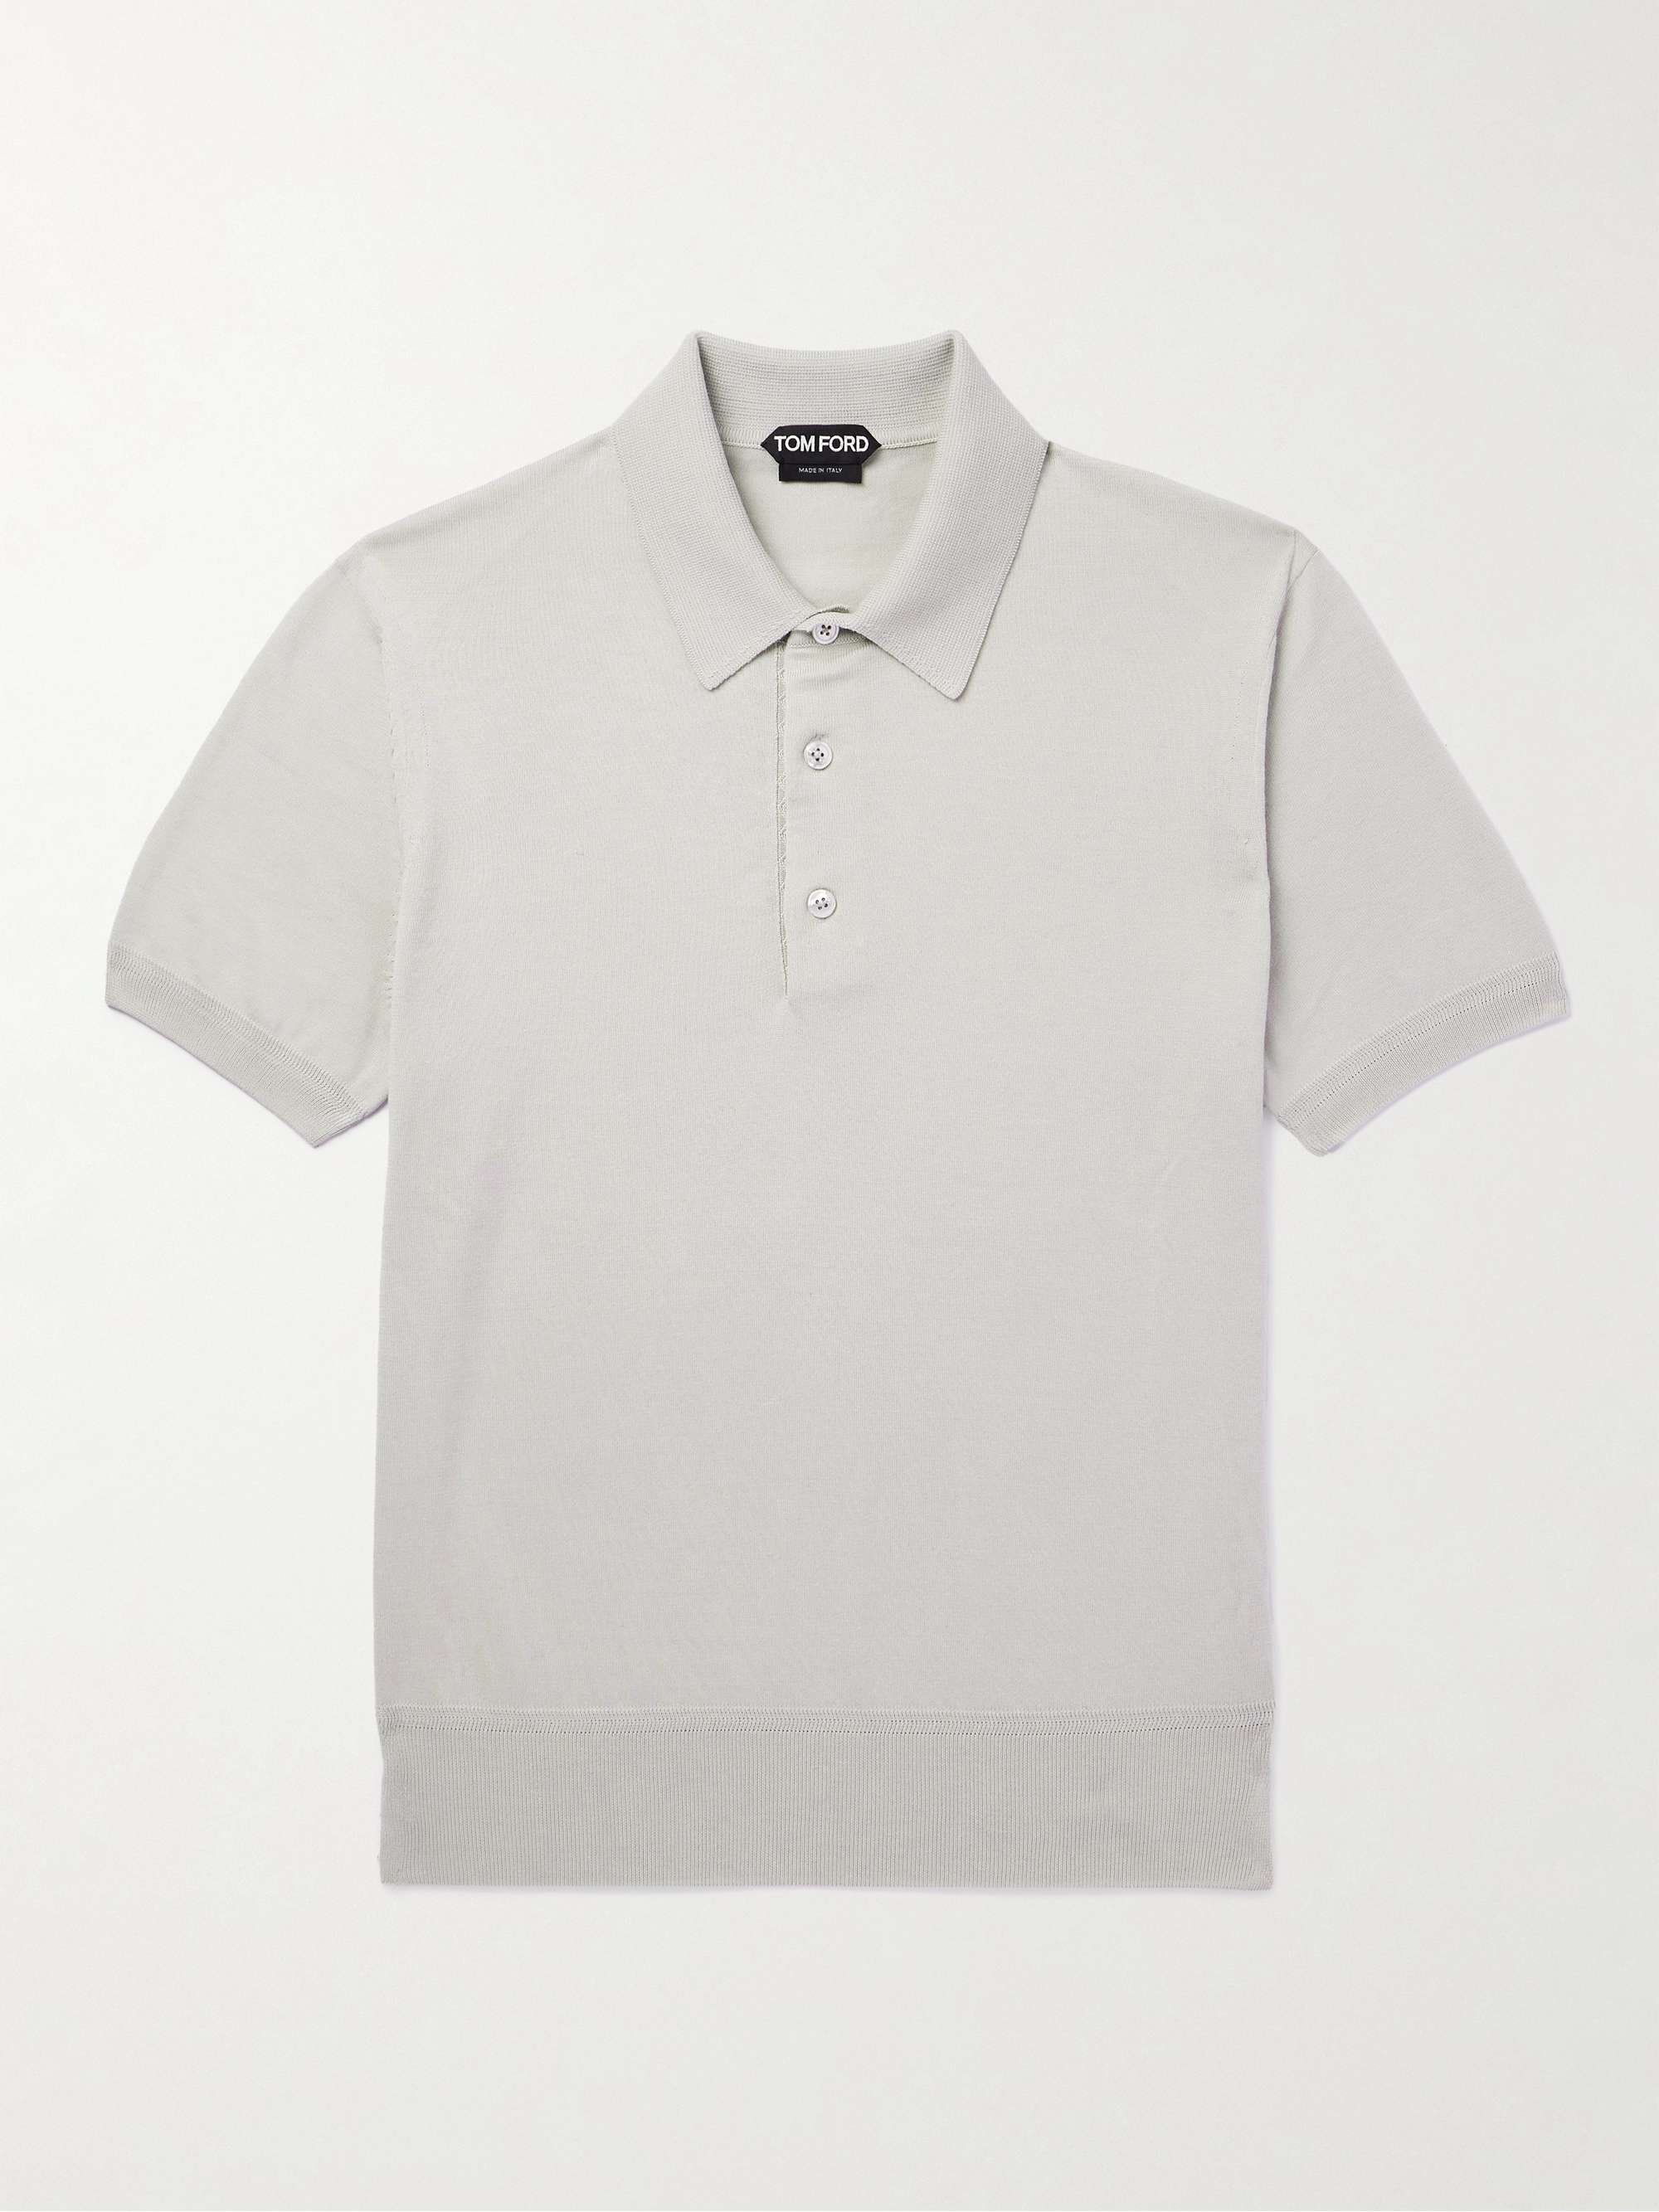 TOM FORD Slim-Fit Sea Island Cotton Polo Shirt for Men | MR PORTER